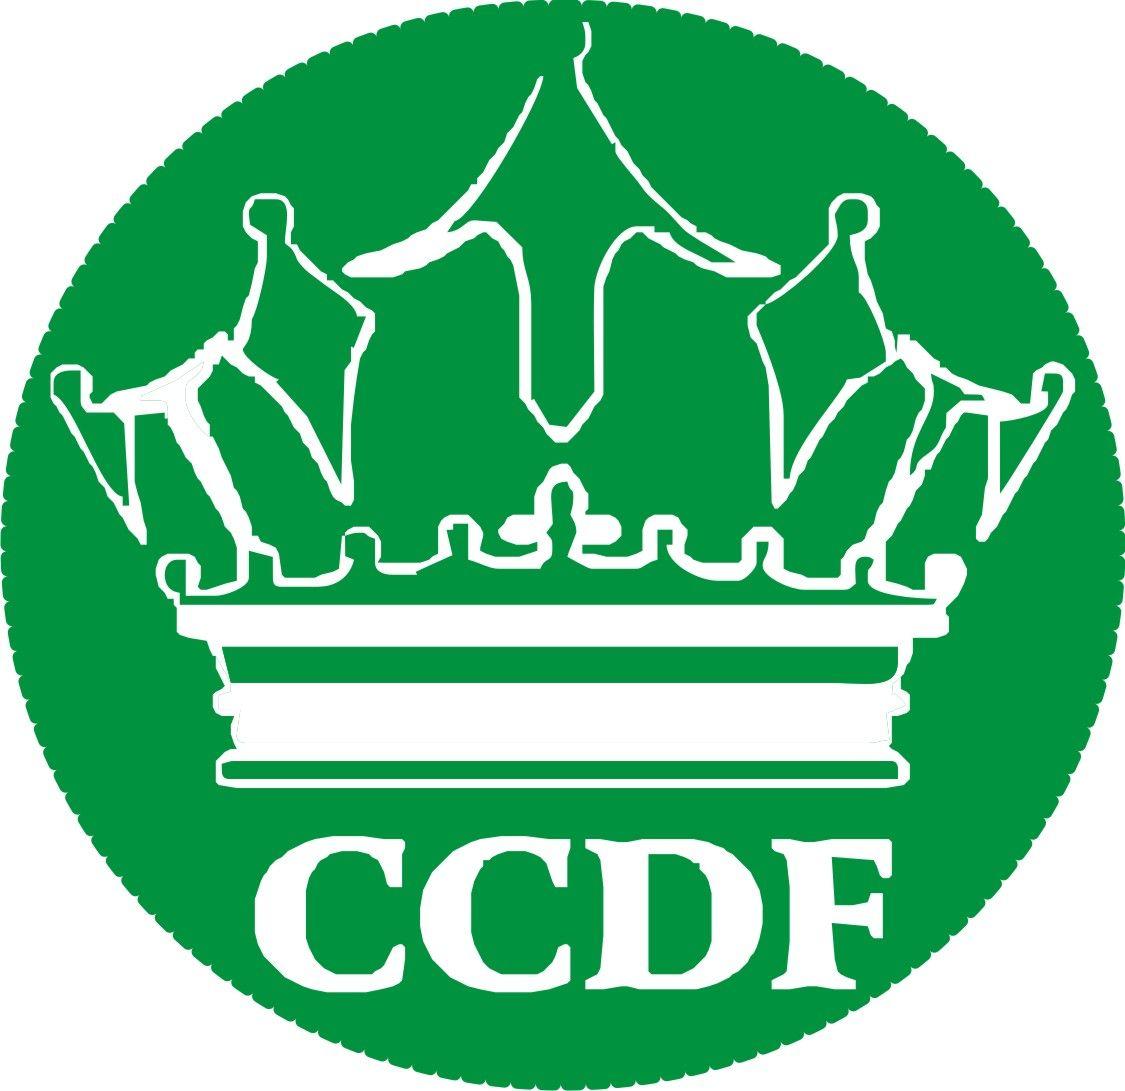 CCDF Logo - CCDF LOGO | Uyomi Blog